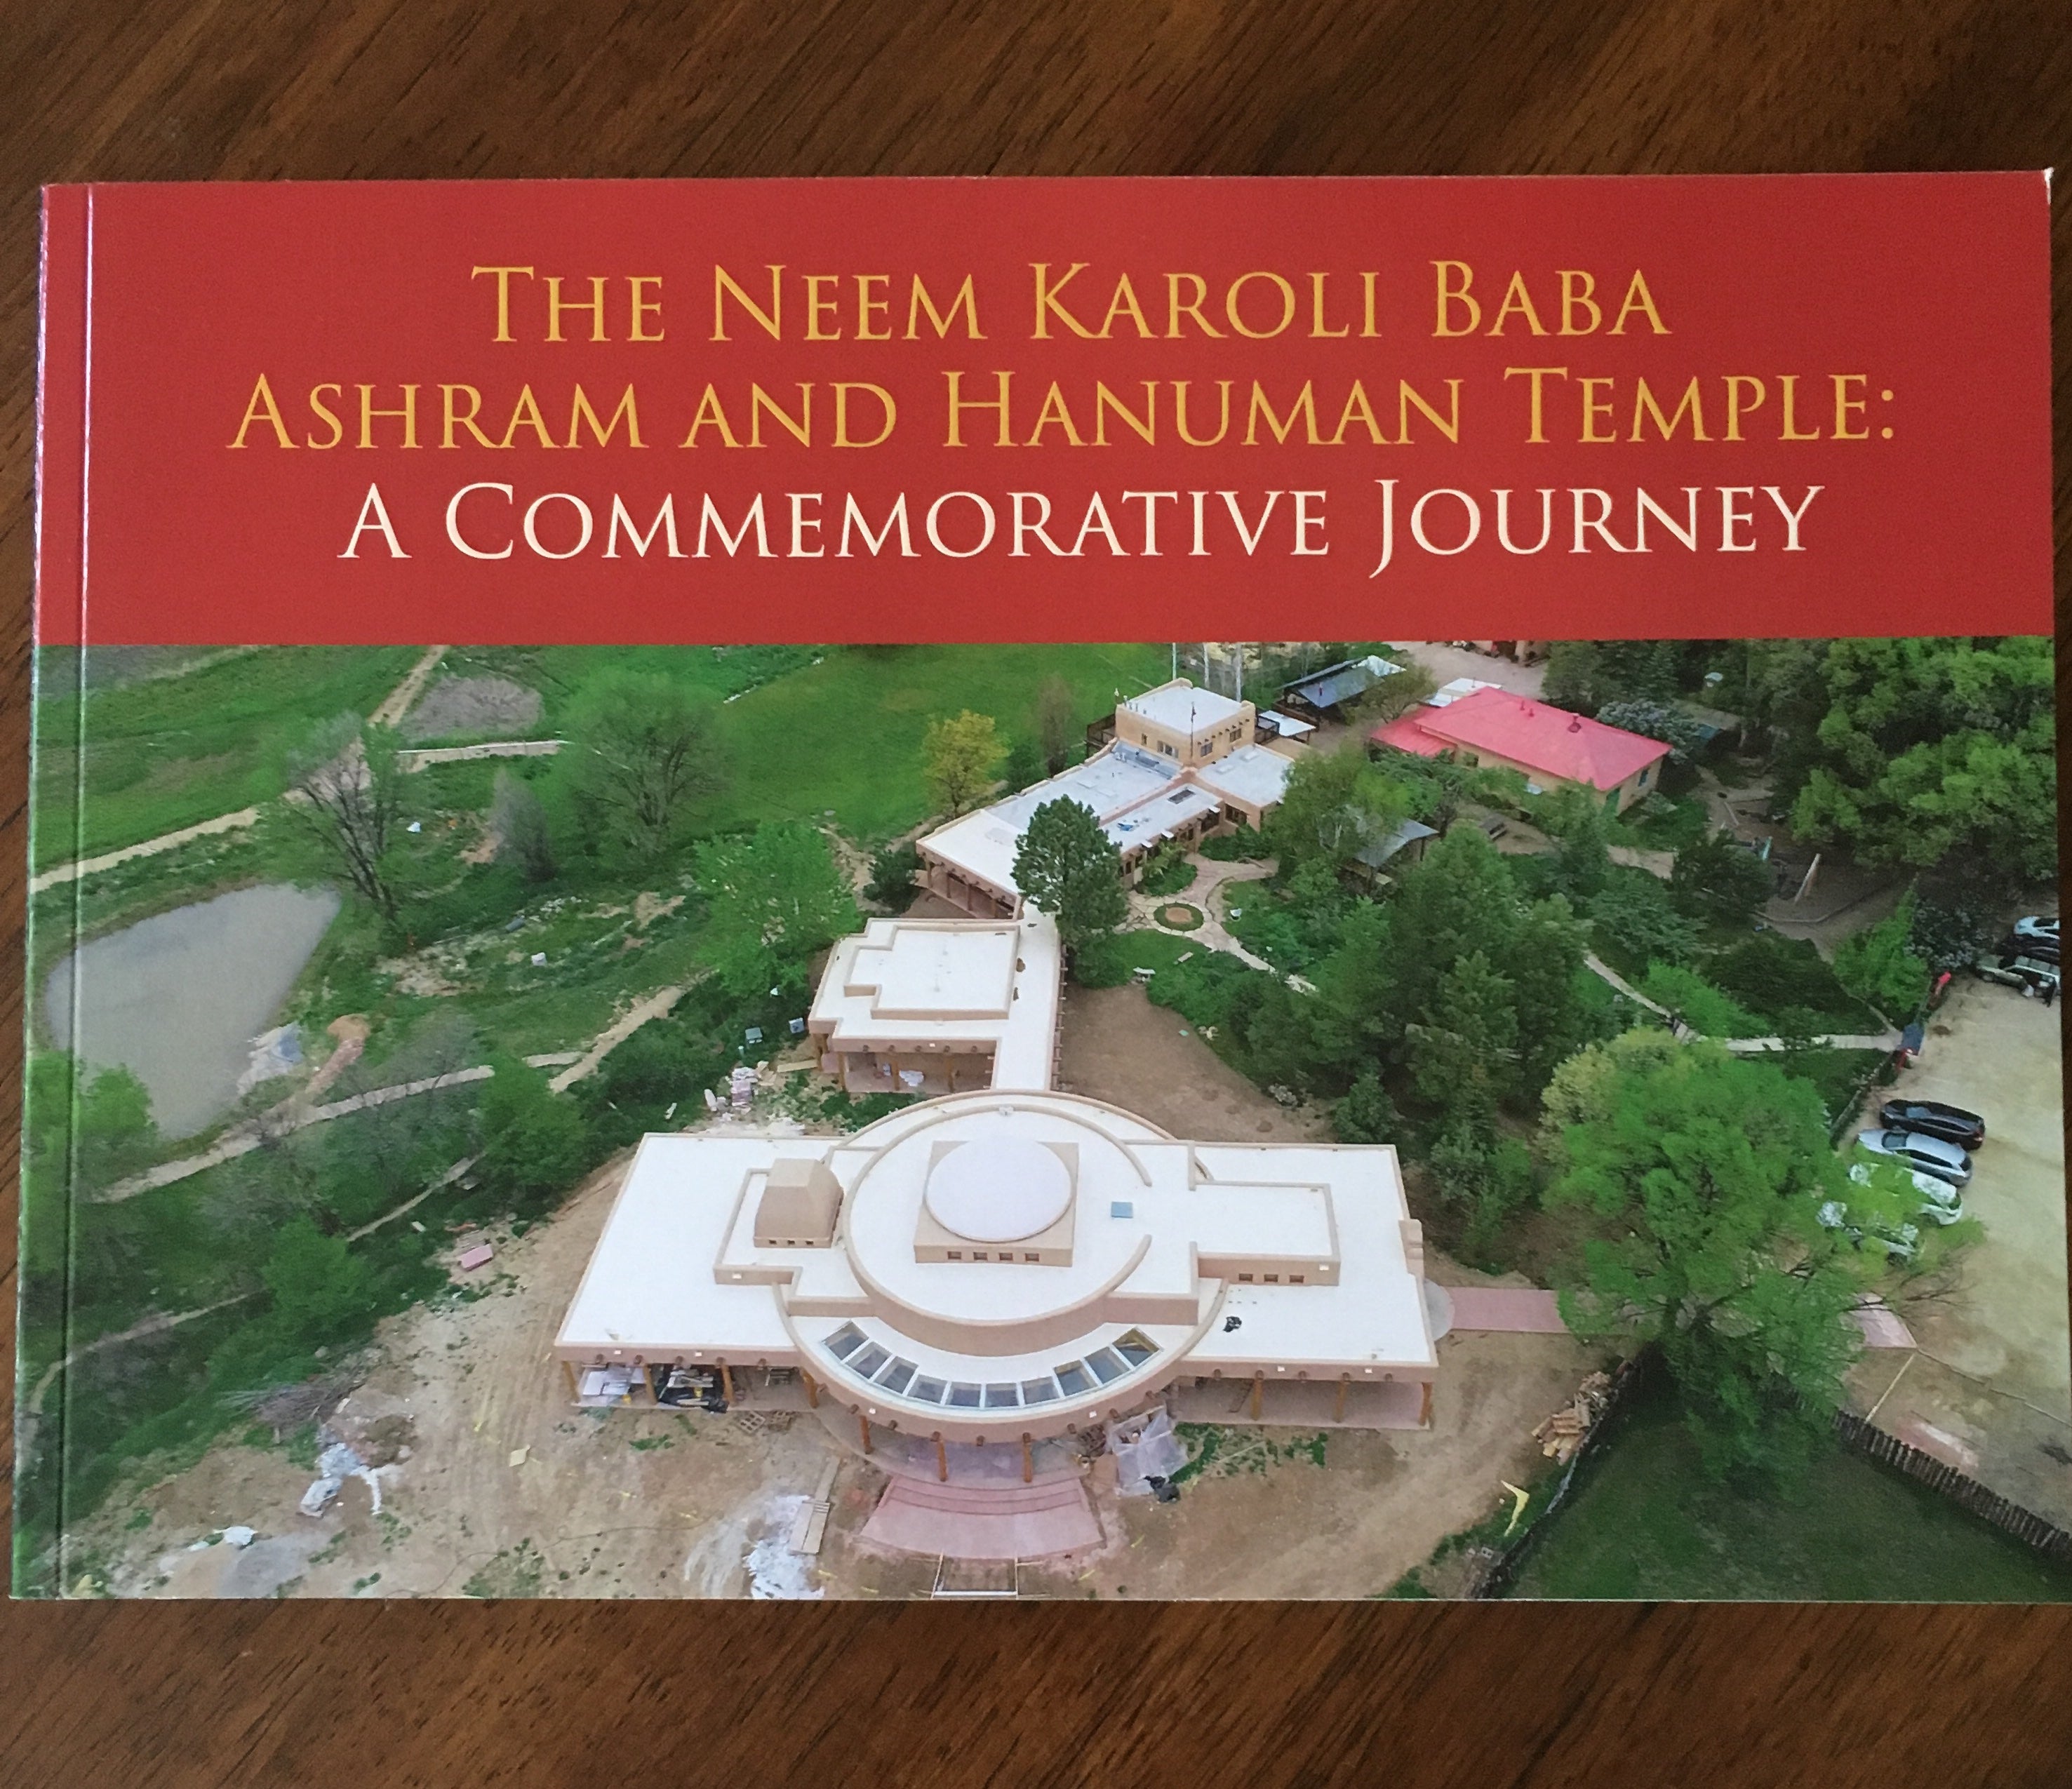 THE NEEM KAROLI BABA ASHRAM AND HANUMAN TEMPLE: A COMMEMORATIVE JOURNEY